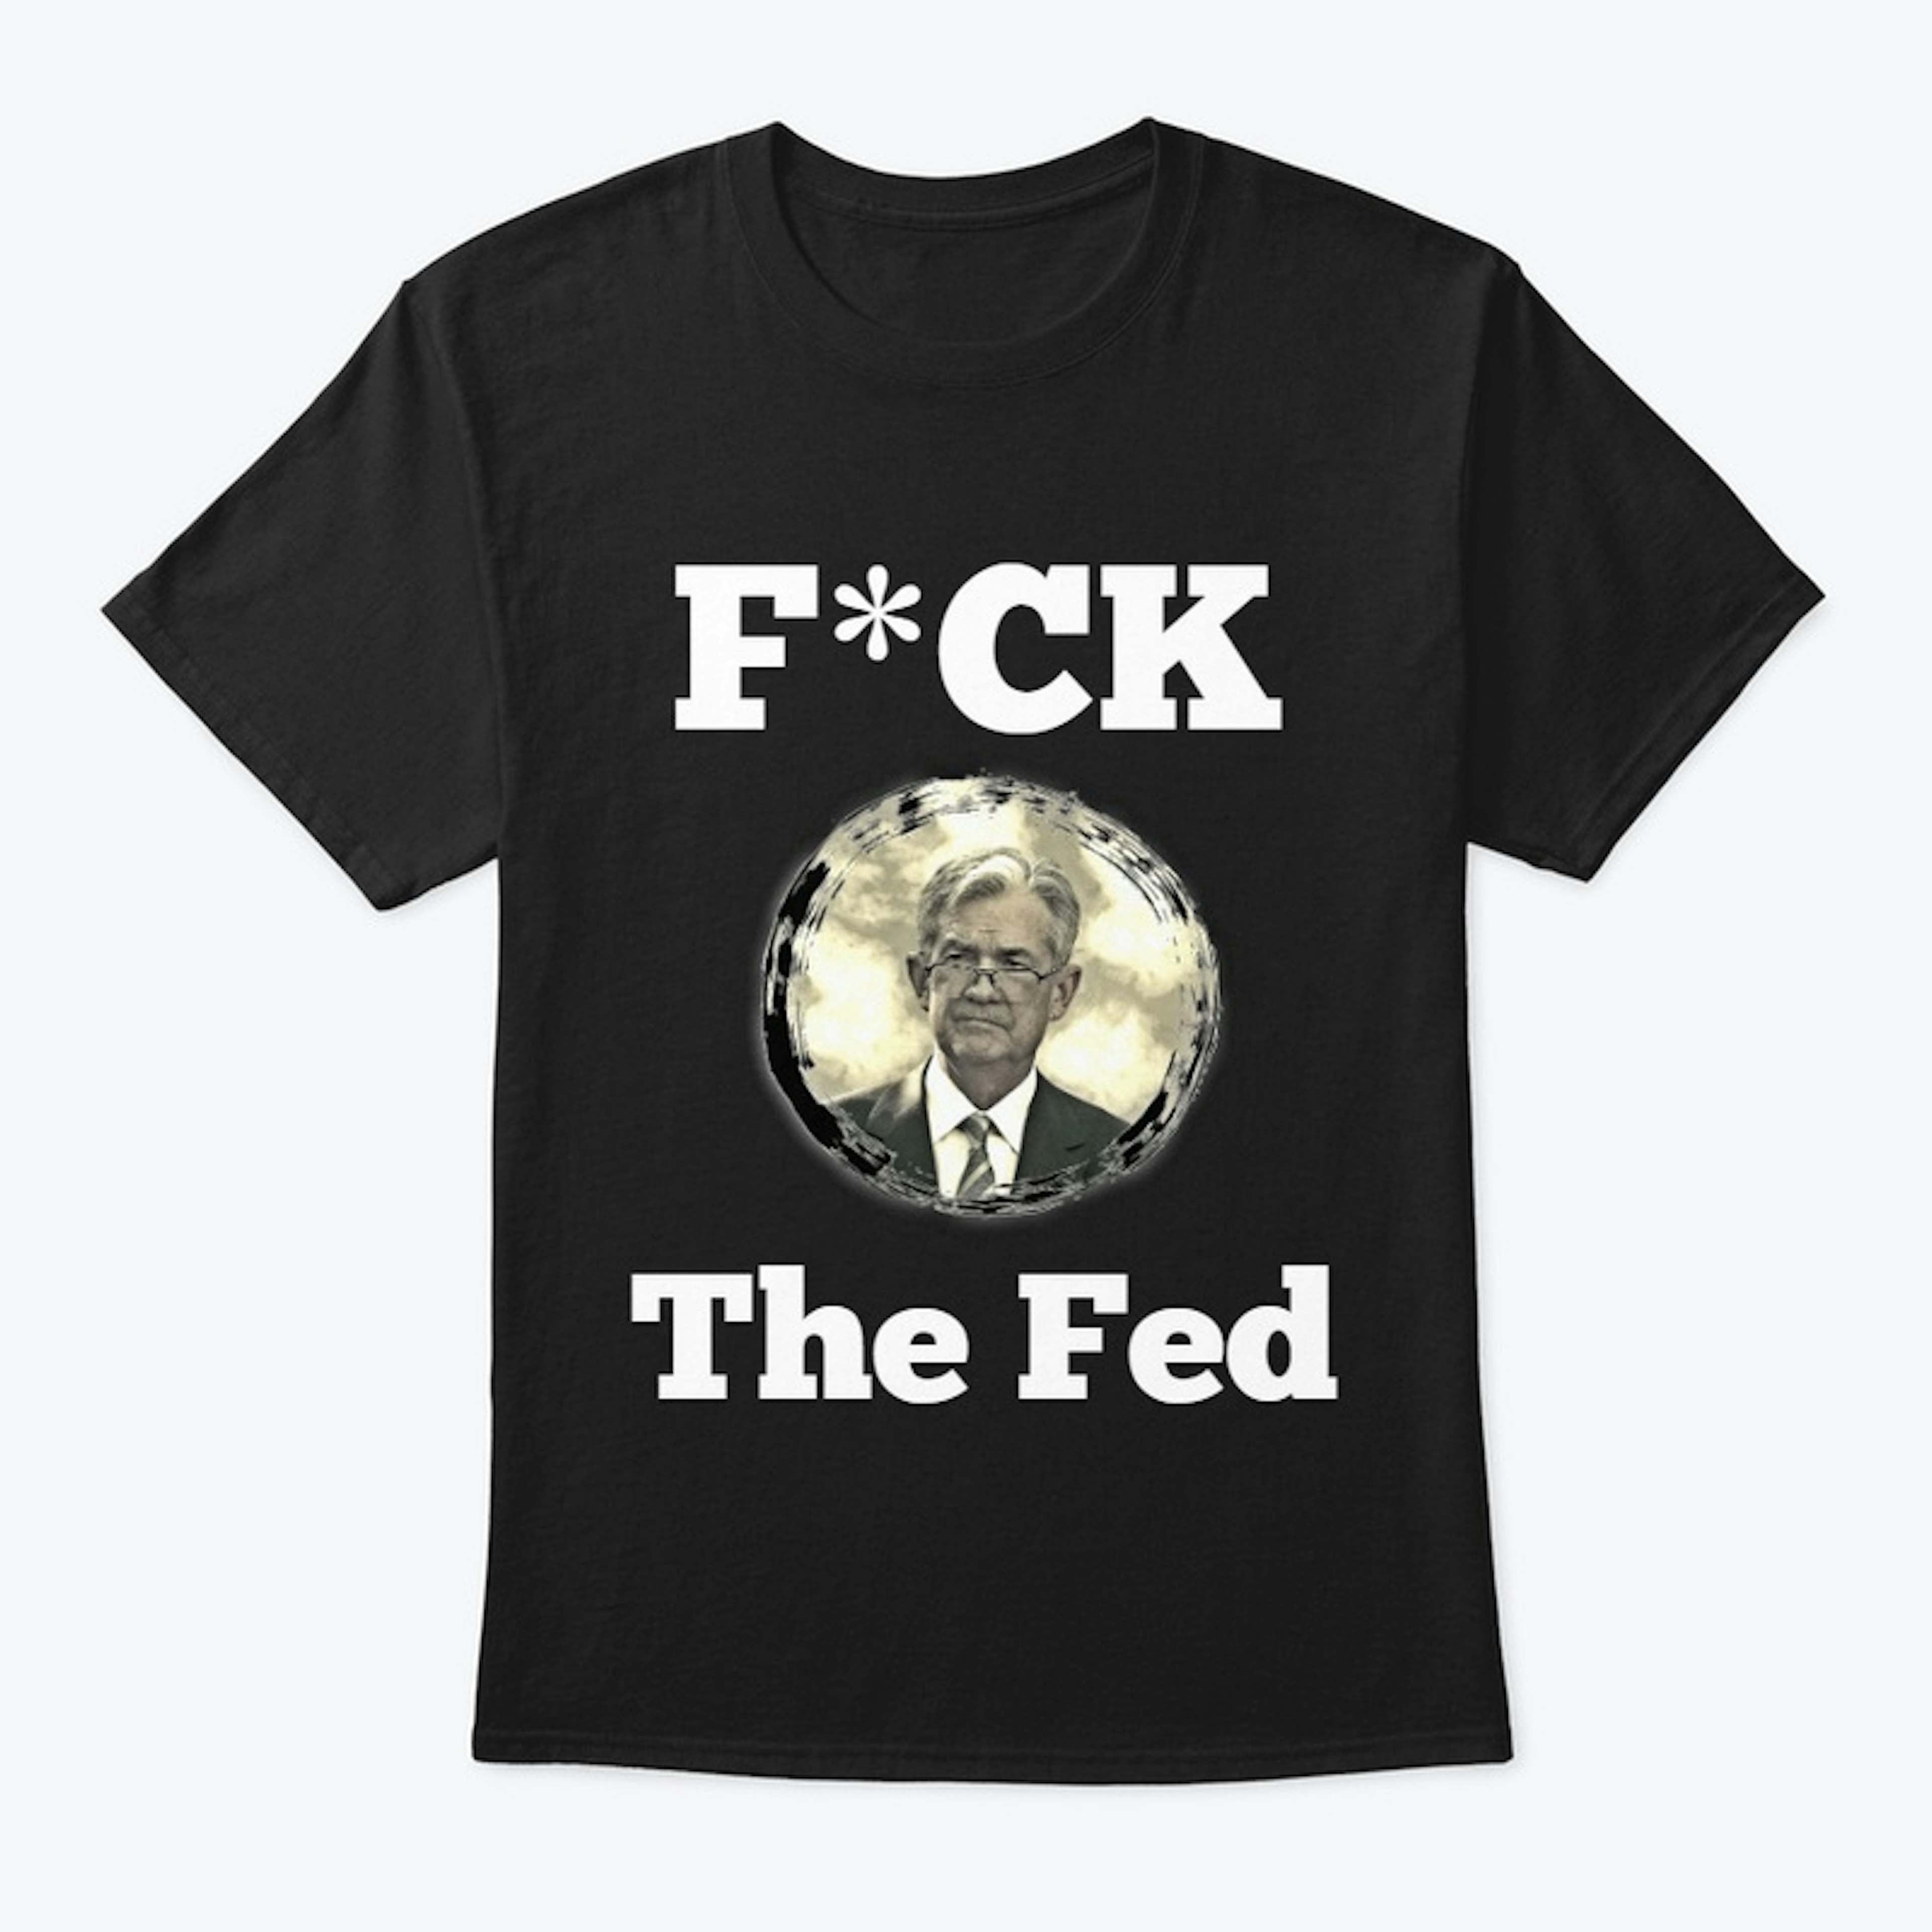 F*ck The Fed!